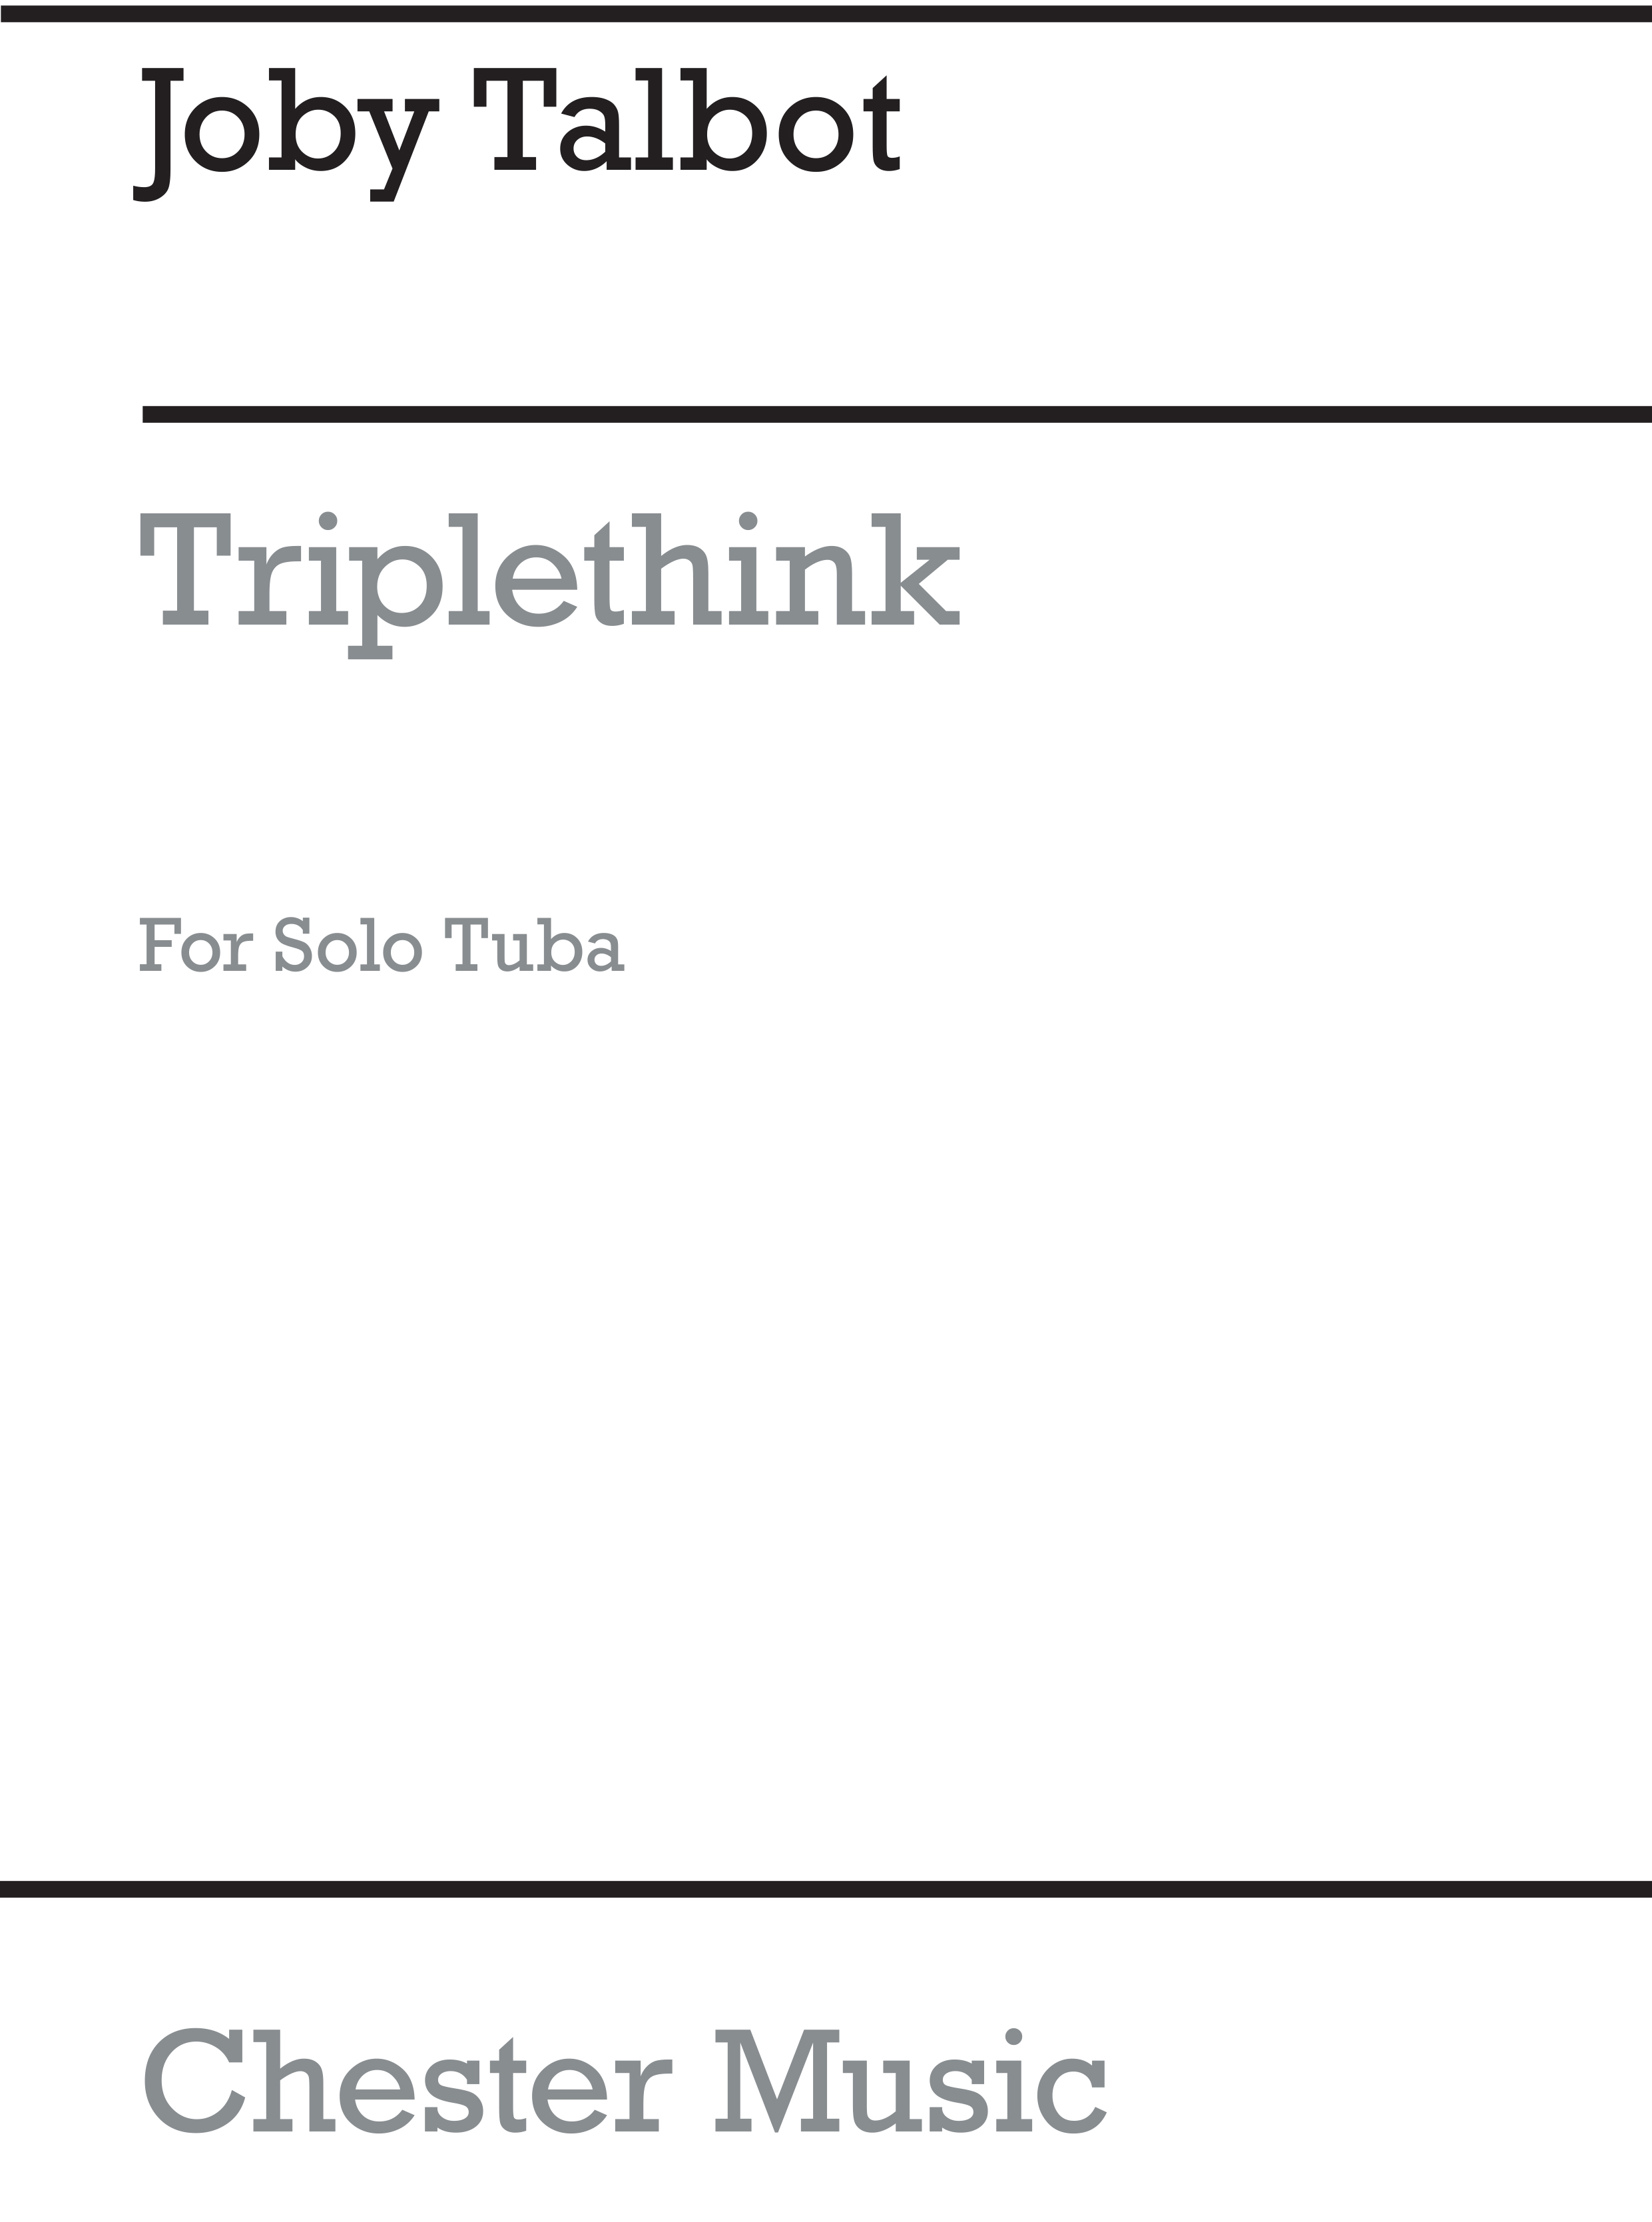 Joby Talbot: Triplethink for Solo Tuba